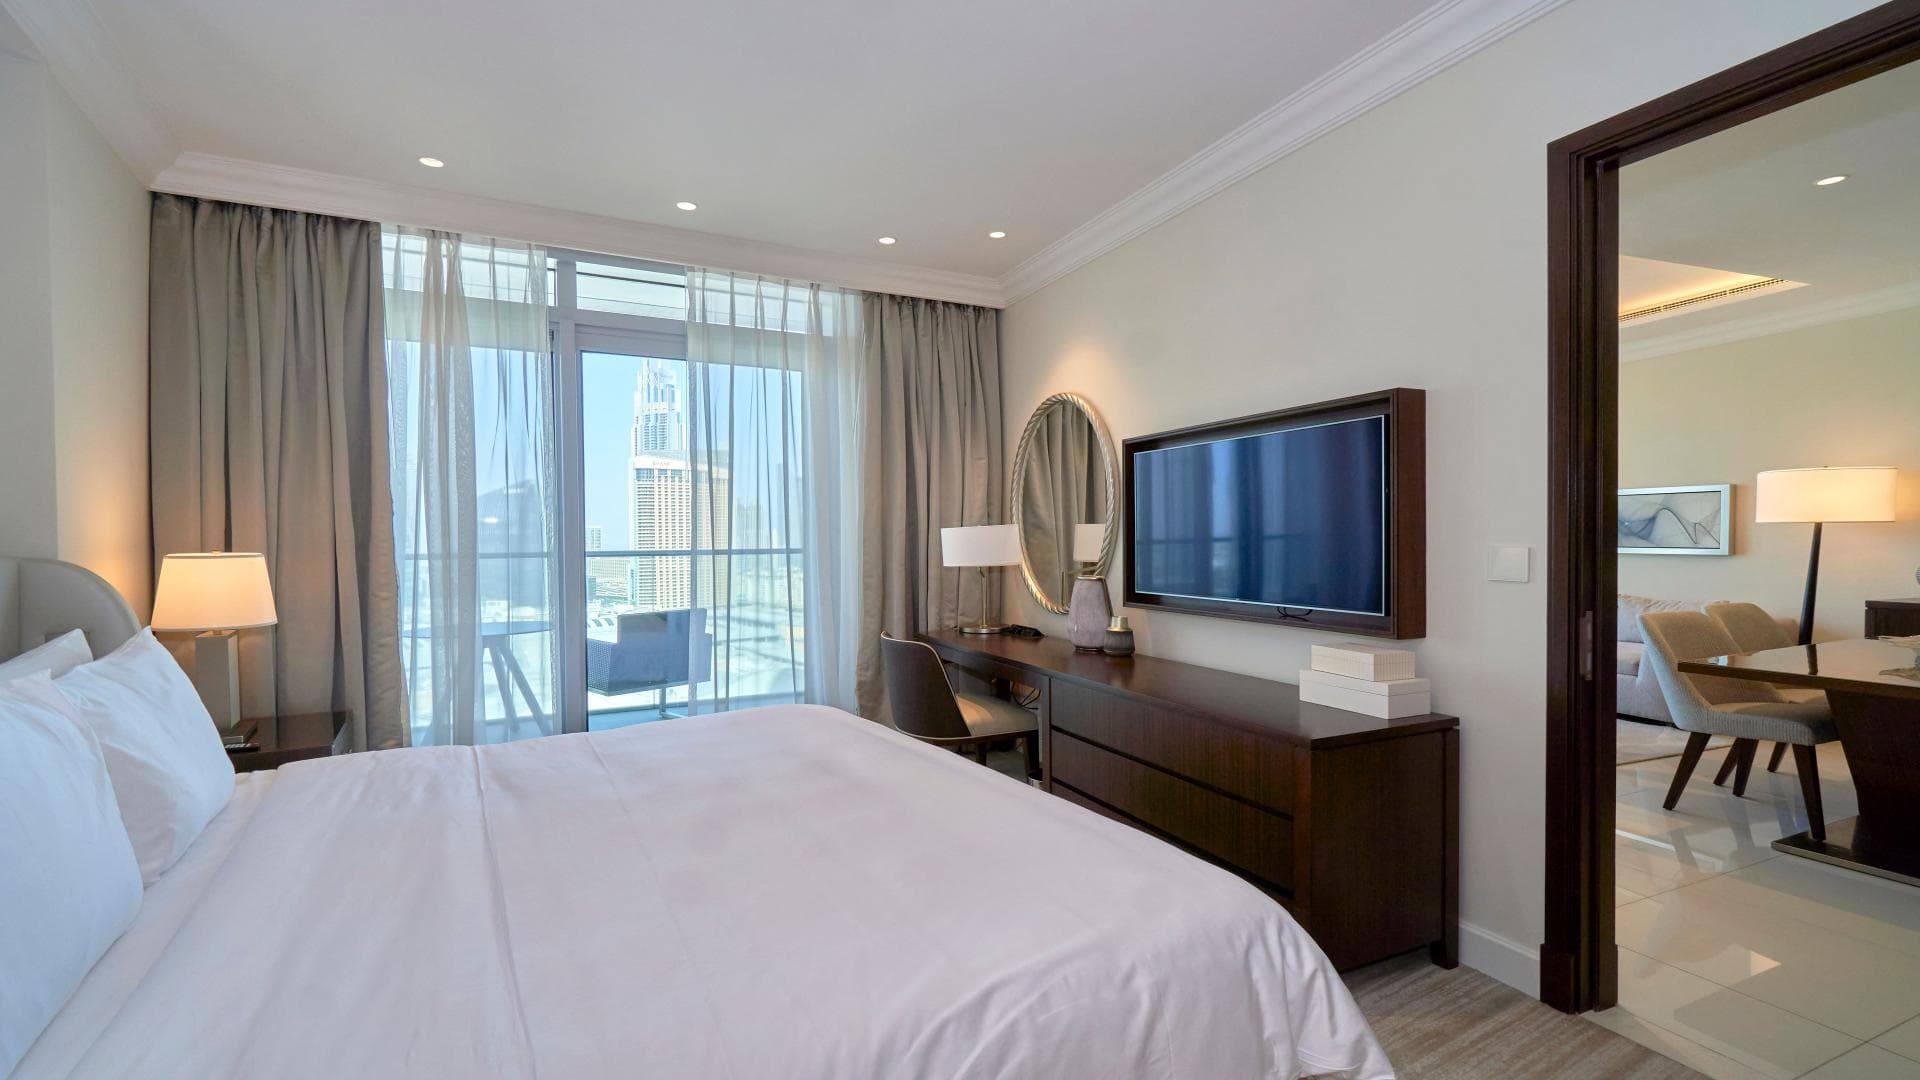 1 Bedroom Apartment For Sale Marina View Tower B Lp38745 22831707b22eda00.jpeg